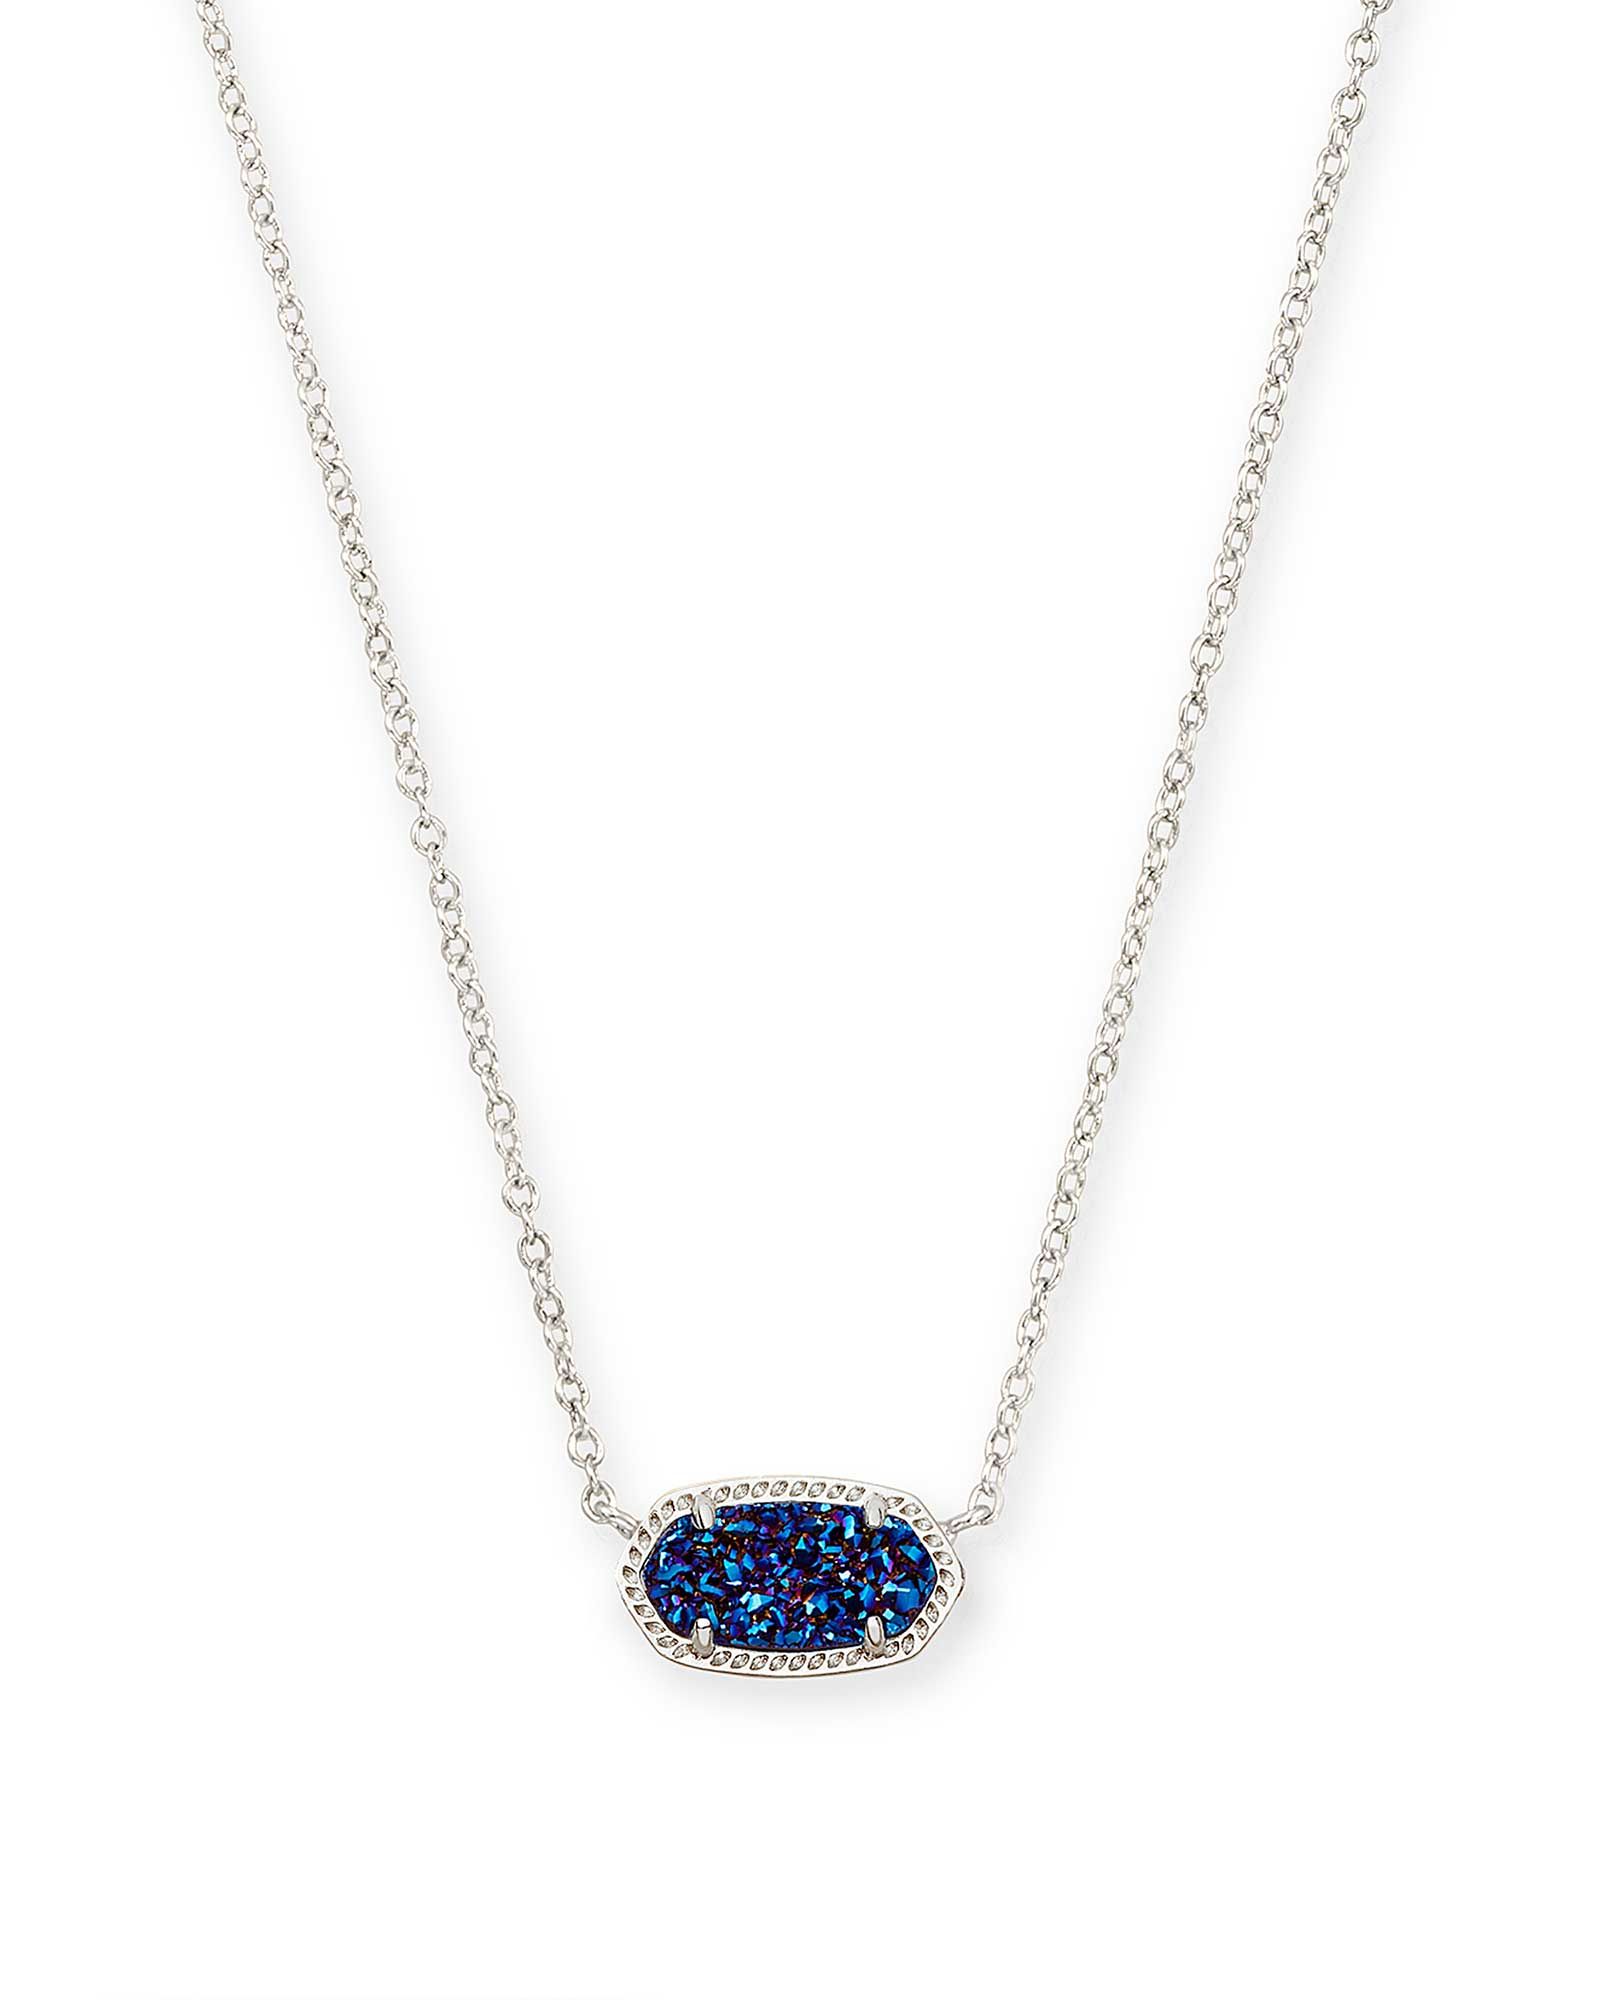 Elisa Silver Pendant Necklace in Indigo Blue Drusy | Kendra Scott